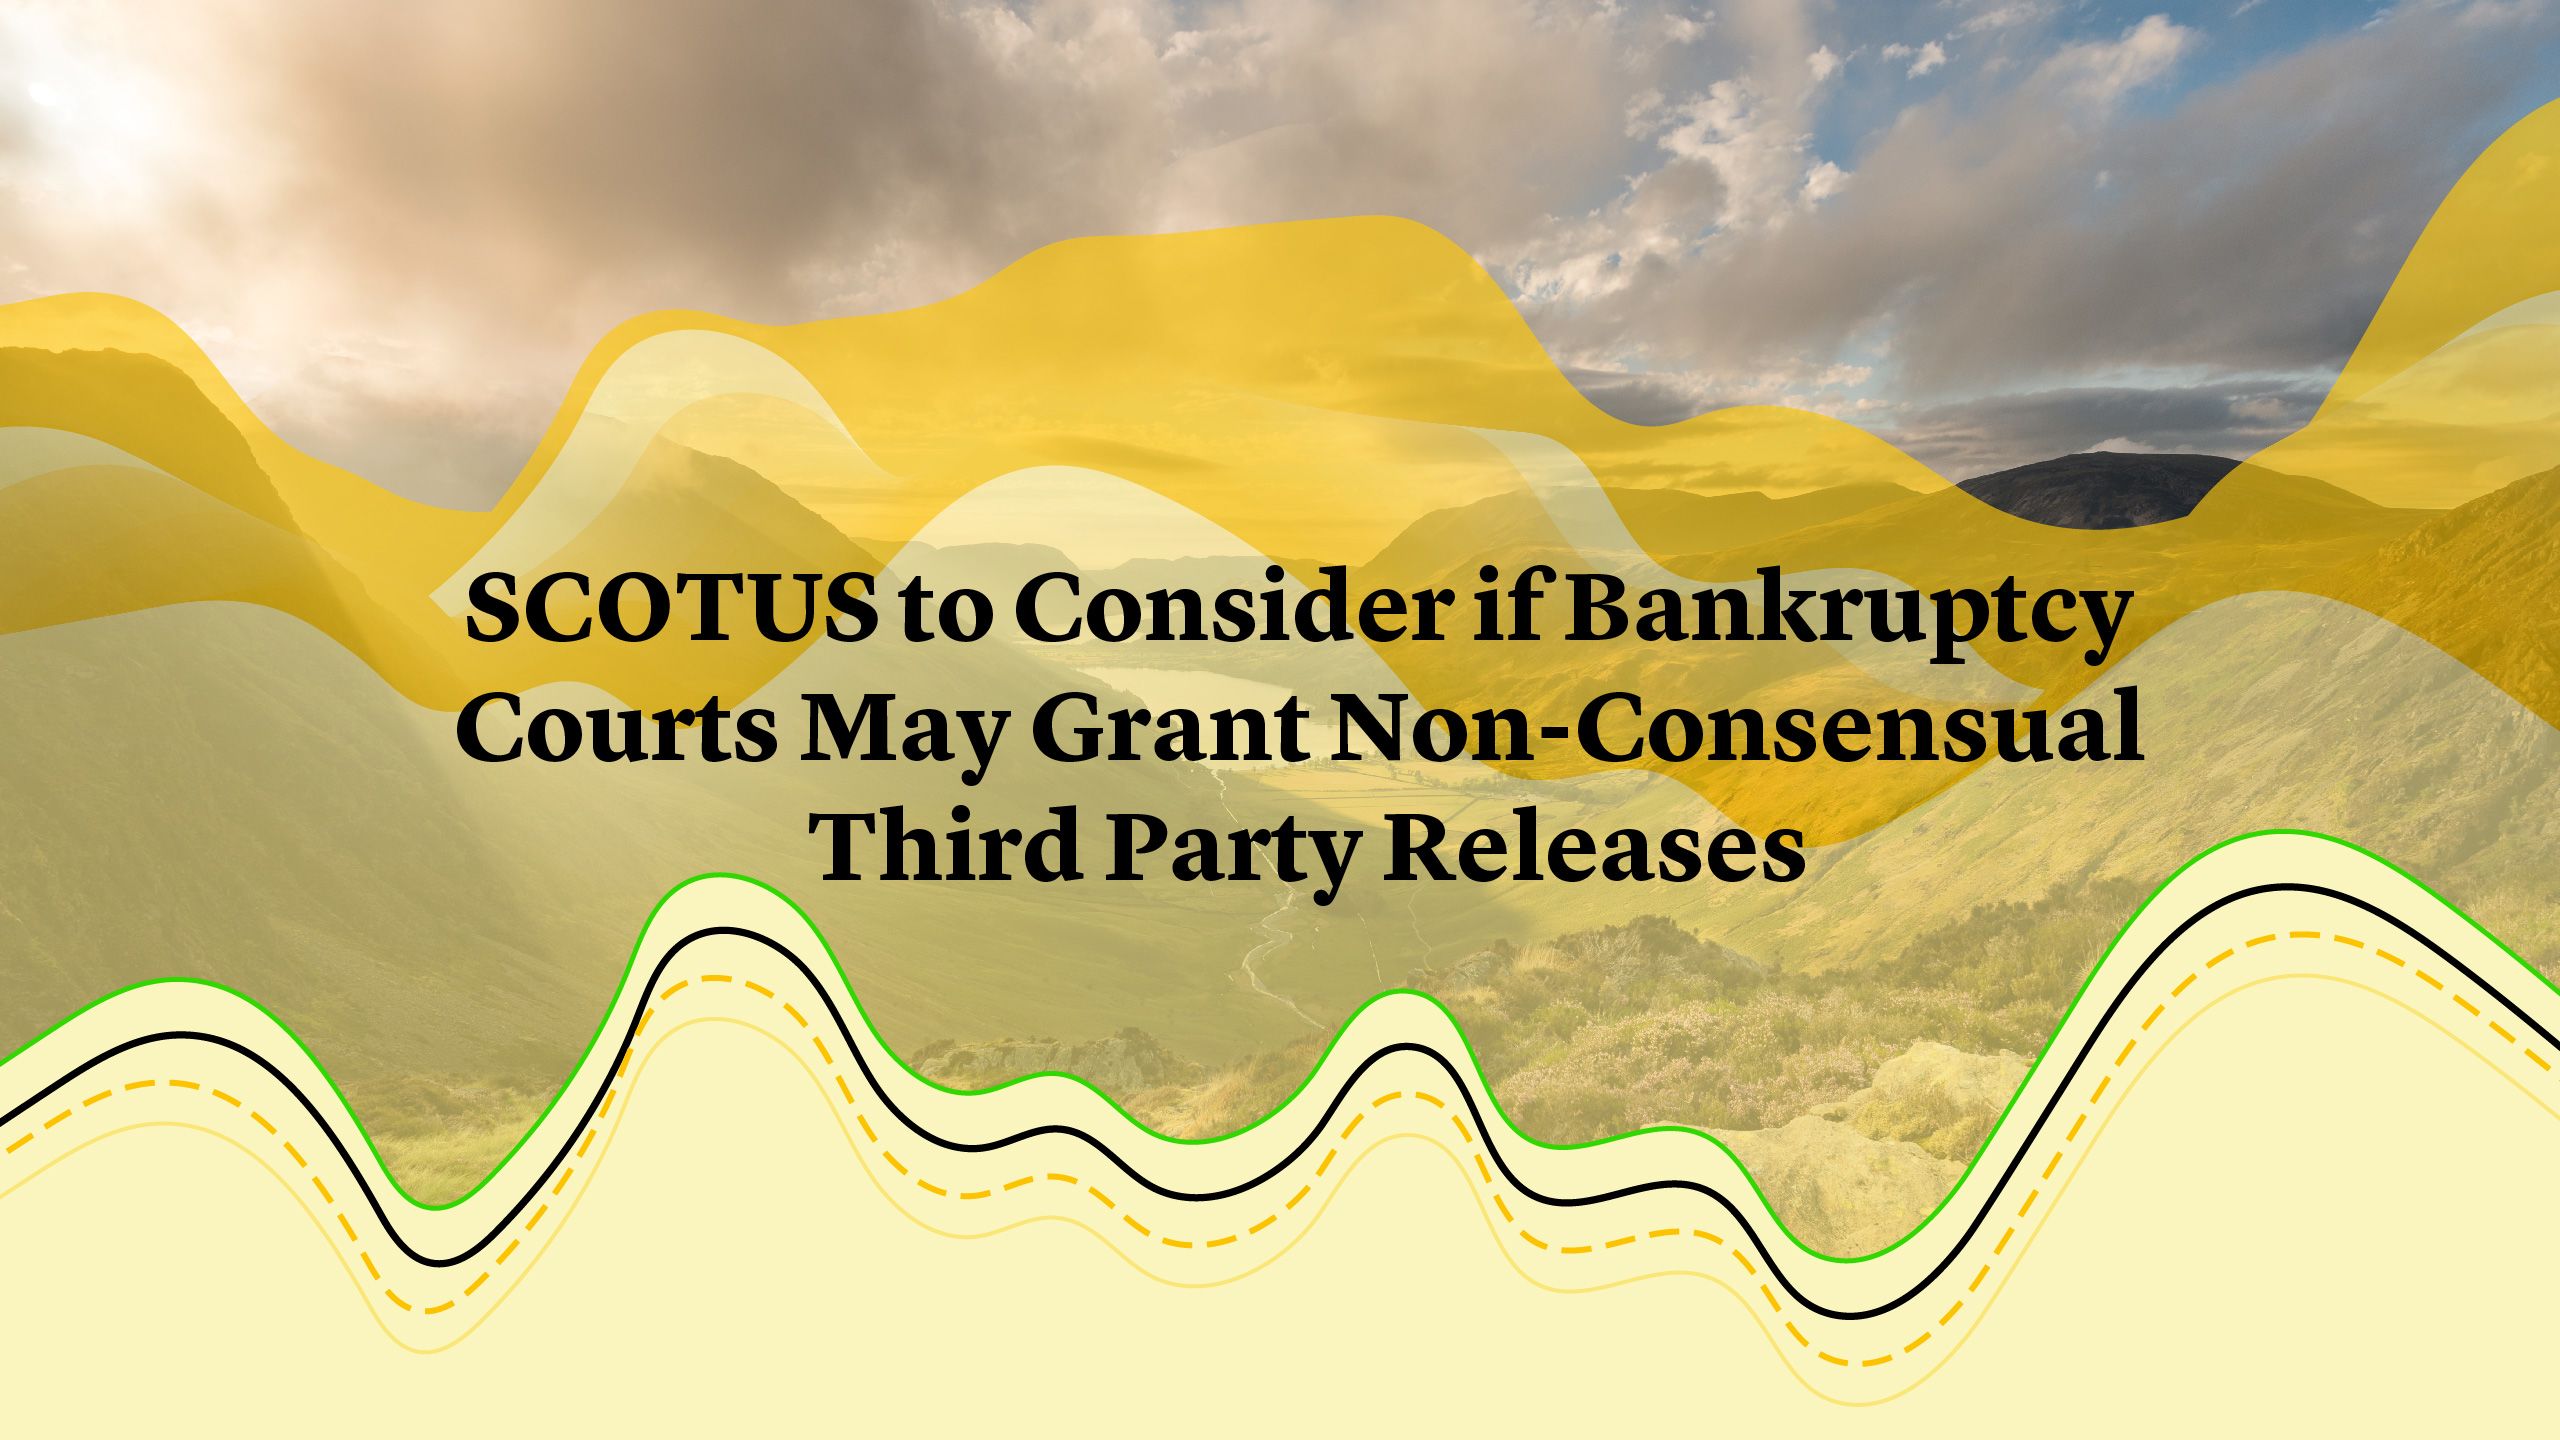 SCOTUS to Consider if Bankruptcy Courts May Grant Non-Consensual Third Party Releases